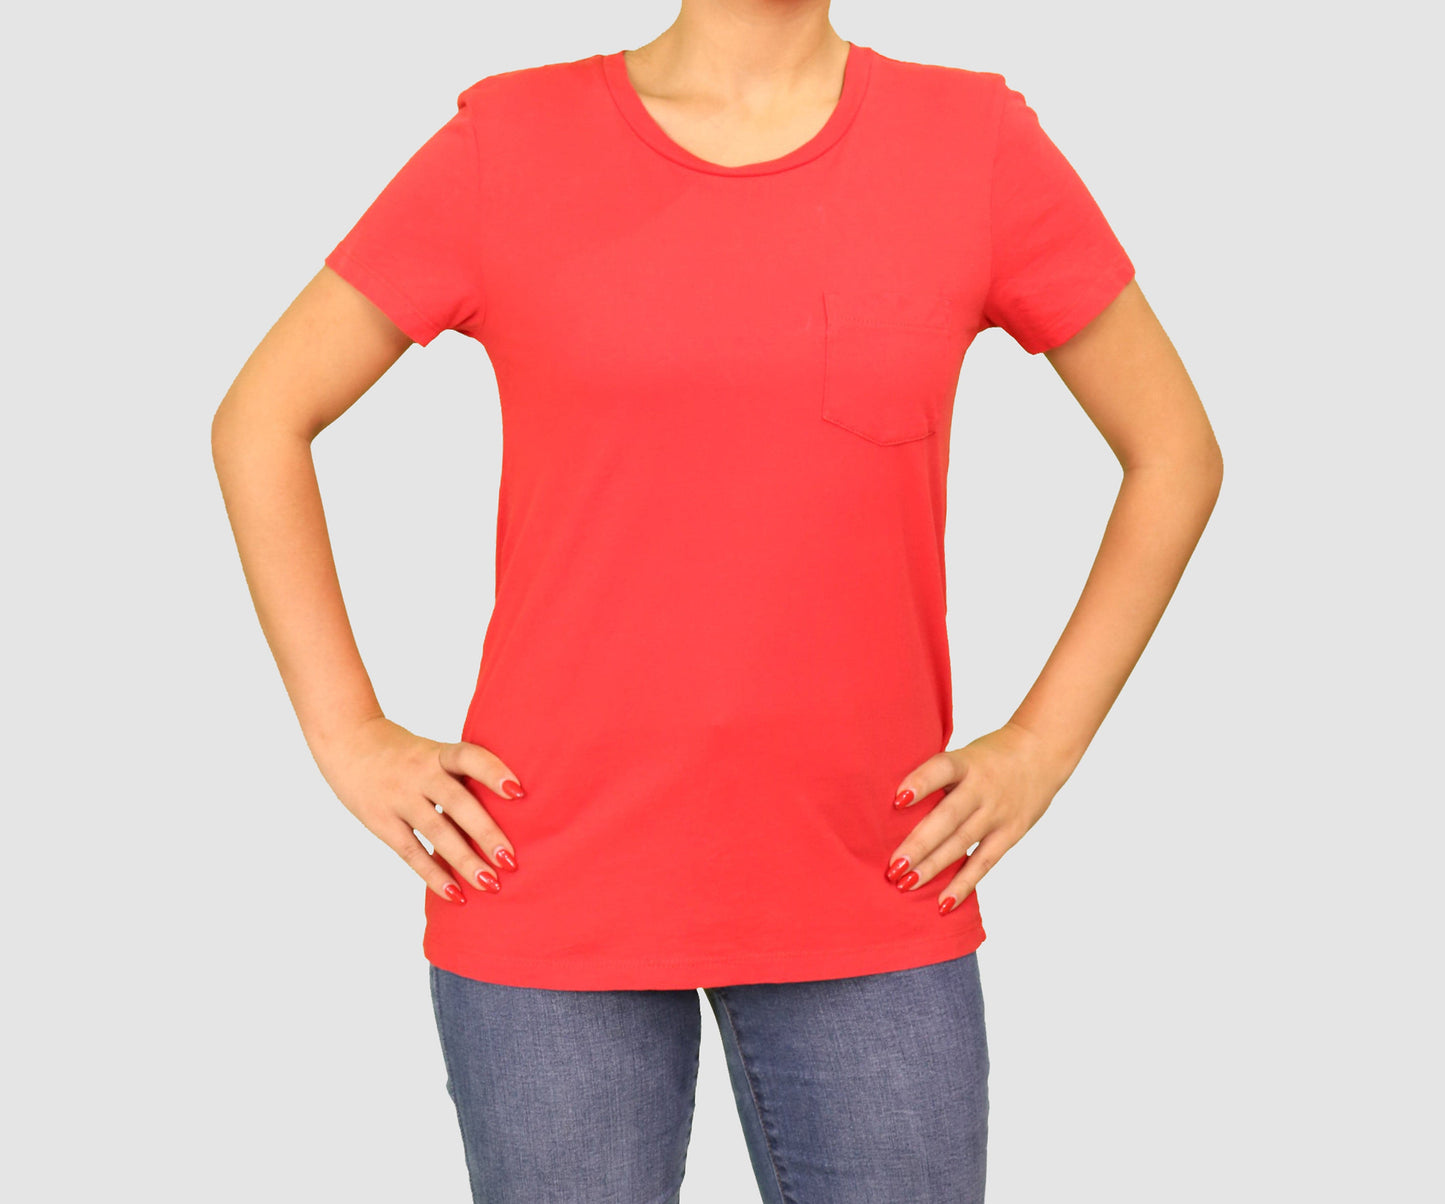 BRANDS & BEYOND Womens Tops XS / Red Short Sleeve Top